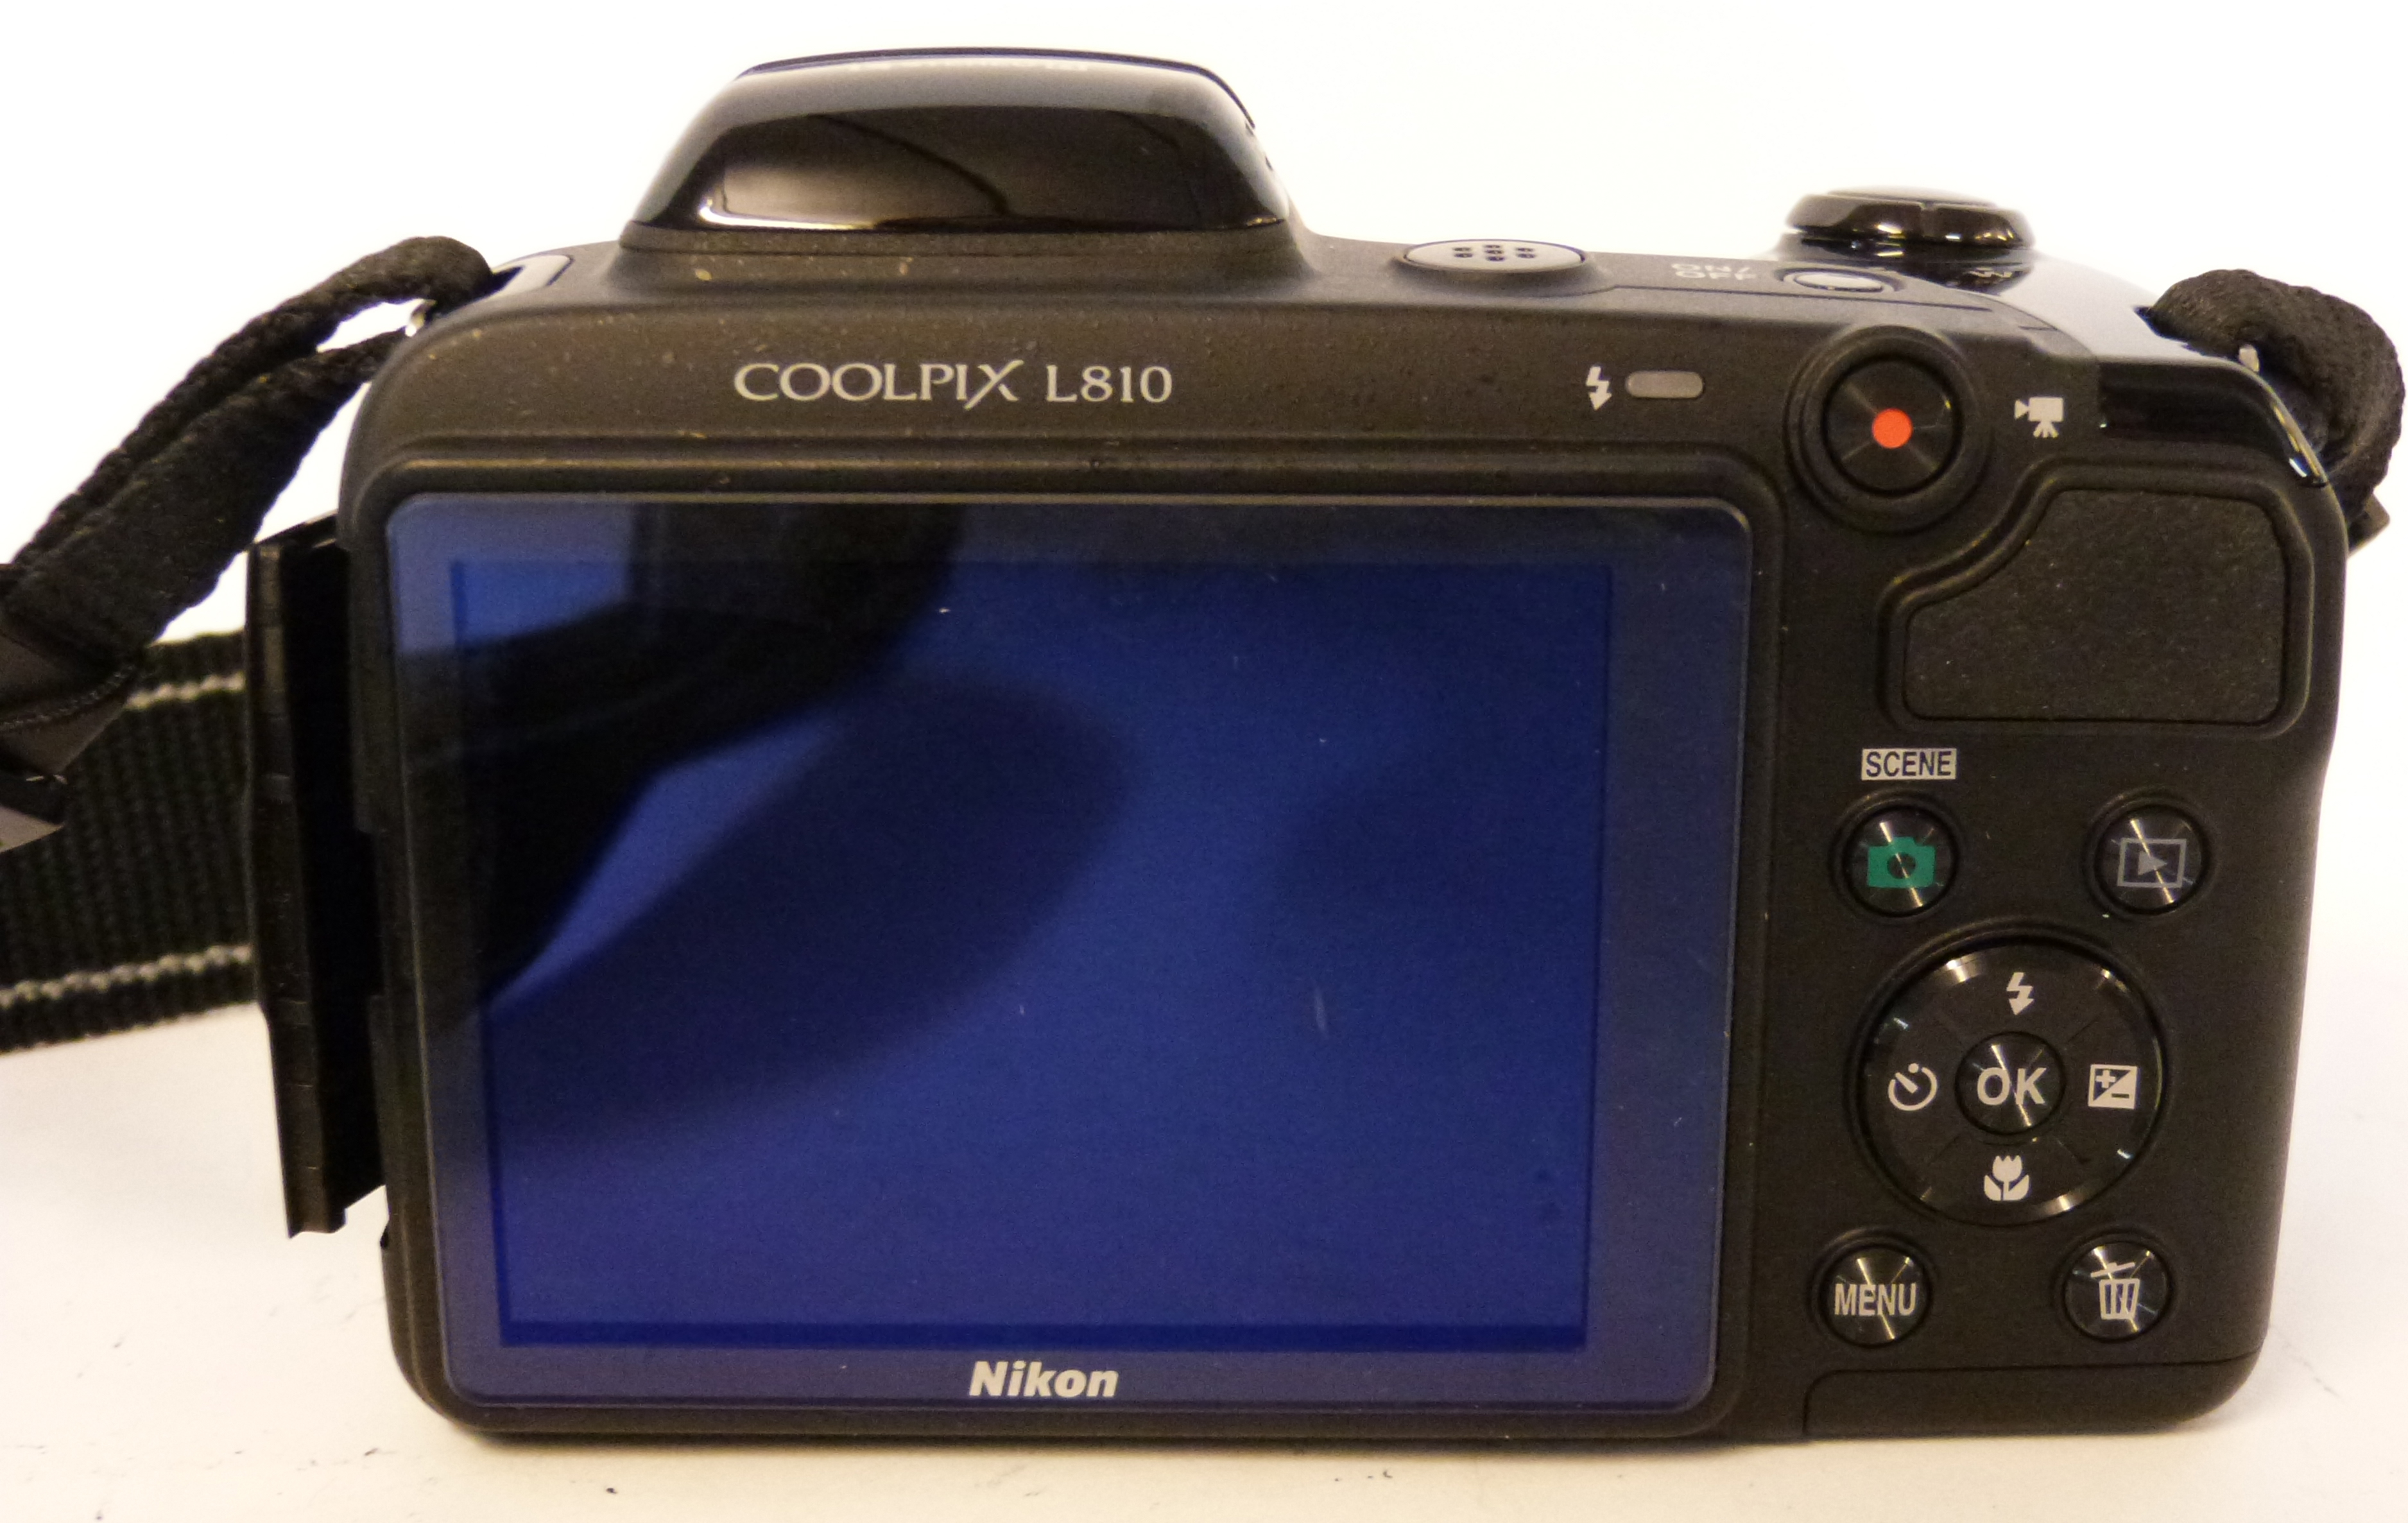 Nikon Coolpix L810 digital camera plus manual and charger - Image 5 of 5